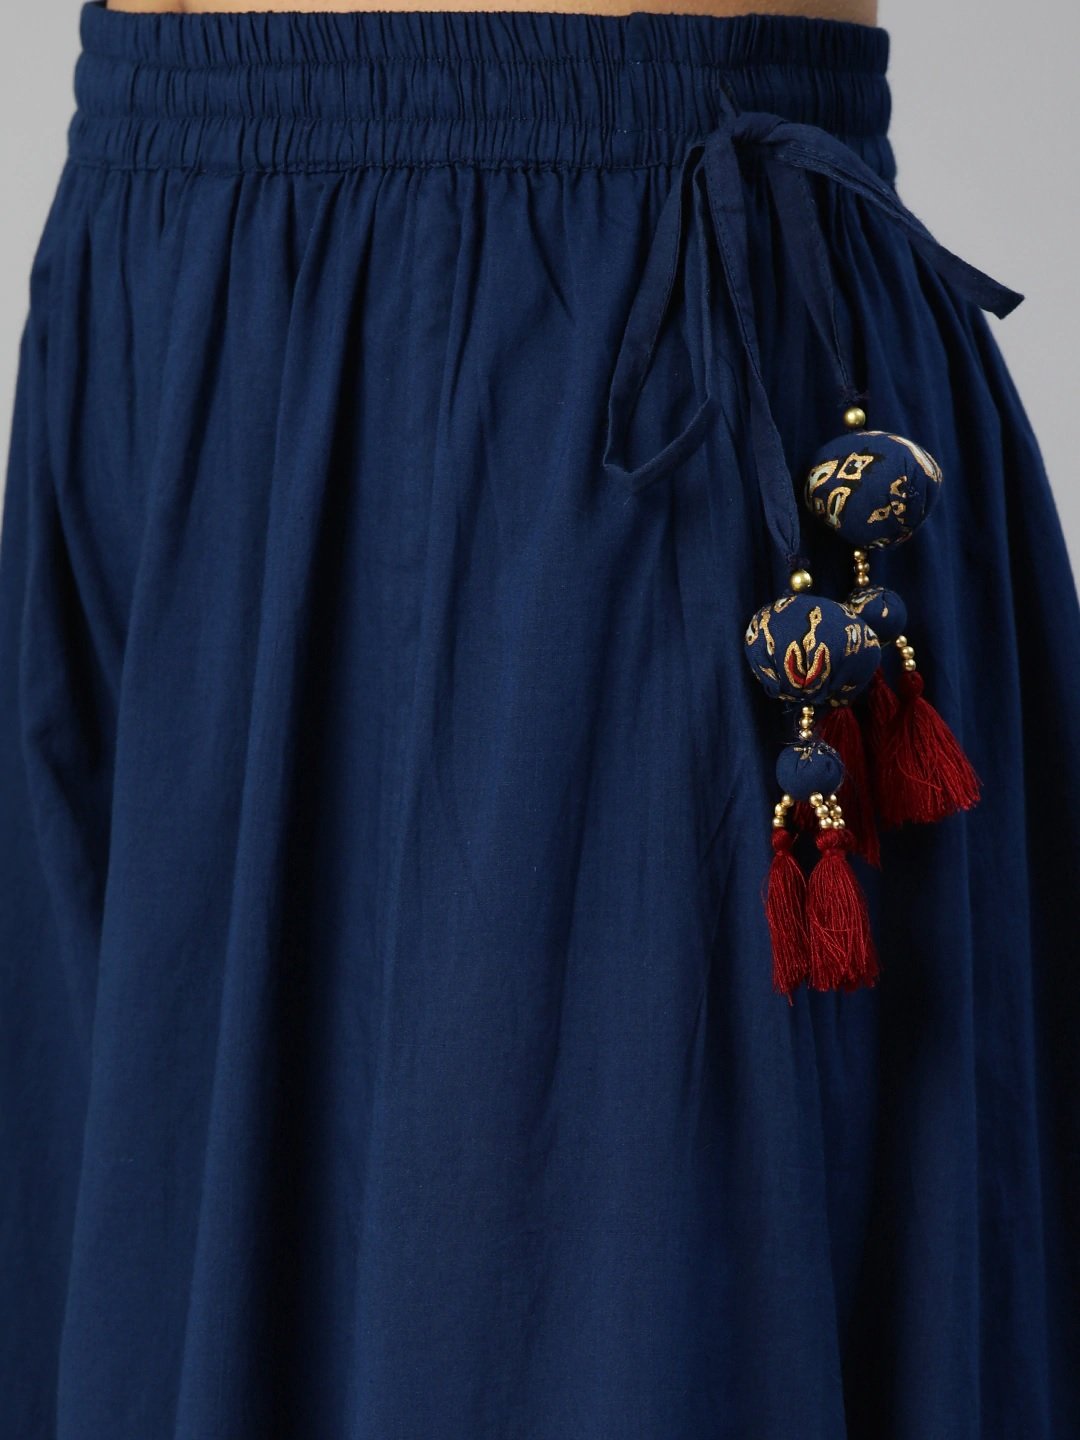 navy-blue-cotton-gota-patti-palazzo-set-10002002BL, Women Indian Ethnic Clothing, Cotton Kurta Set